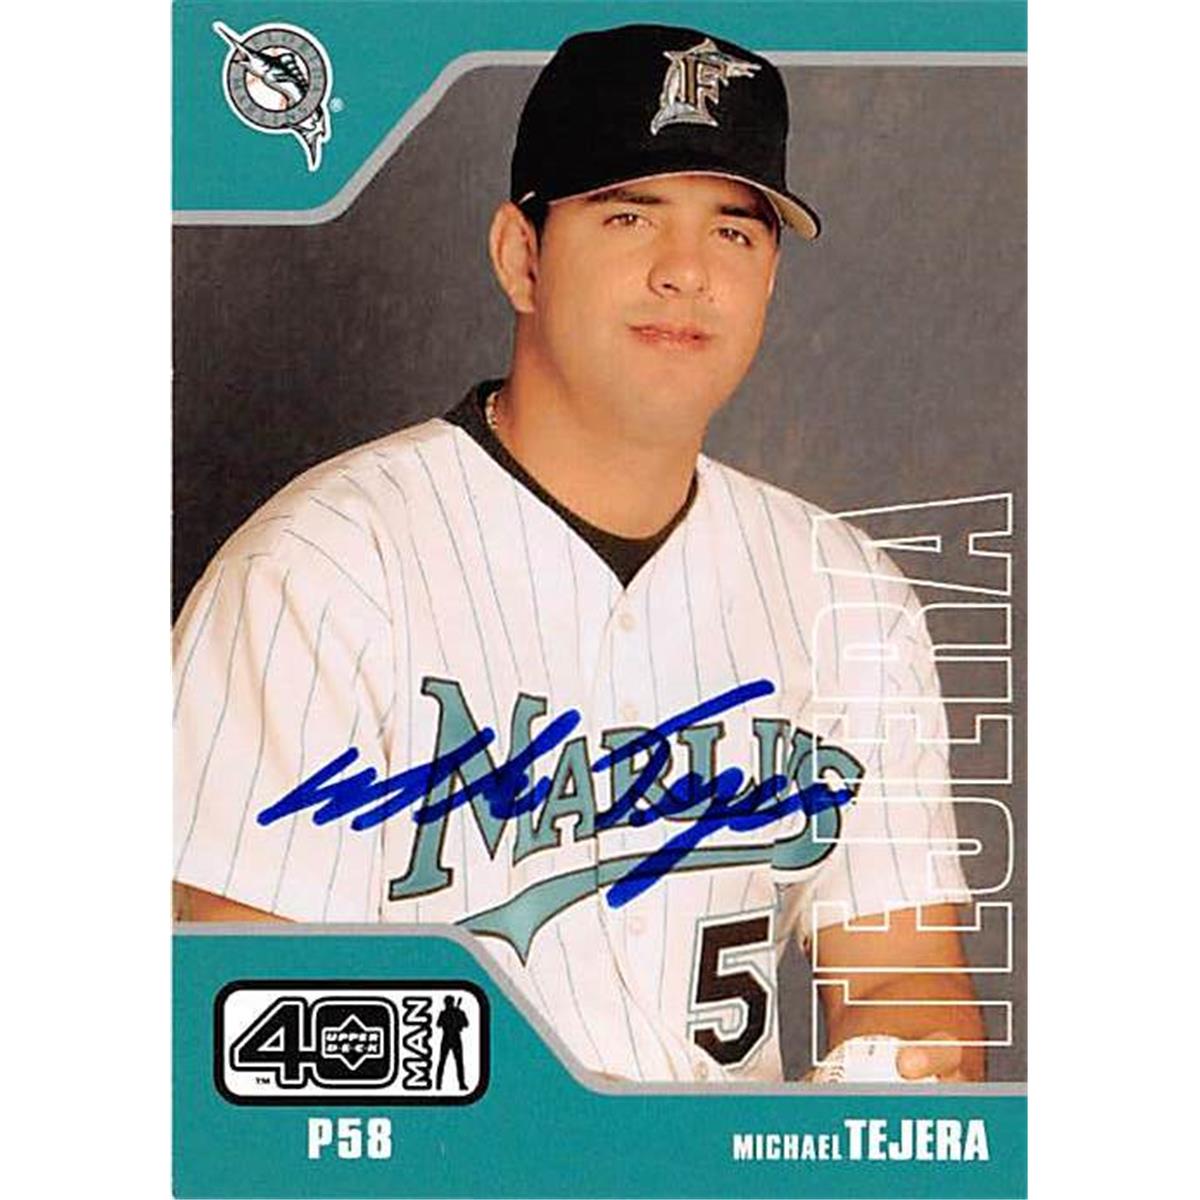 Autograph Warehouse 444336 University of Florida 2000 Upper Deck Fortyman 801 Michael Tejera Autographed Baseball Card